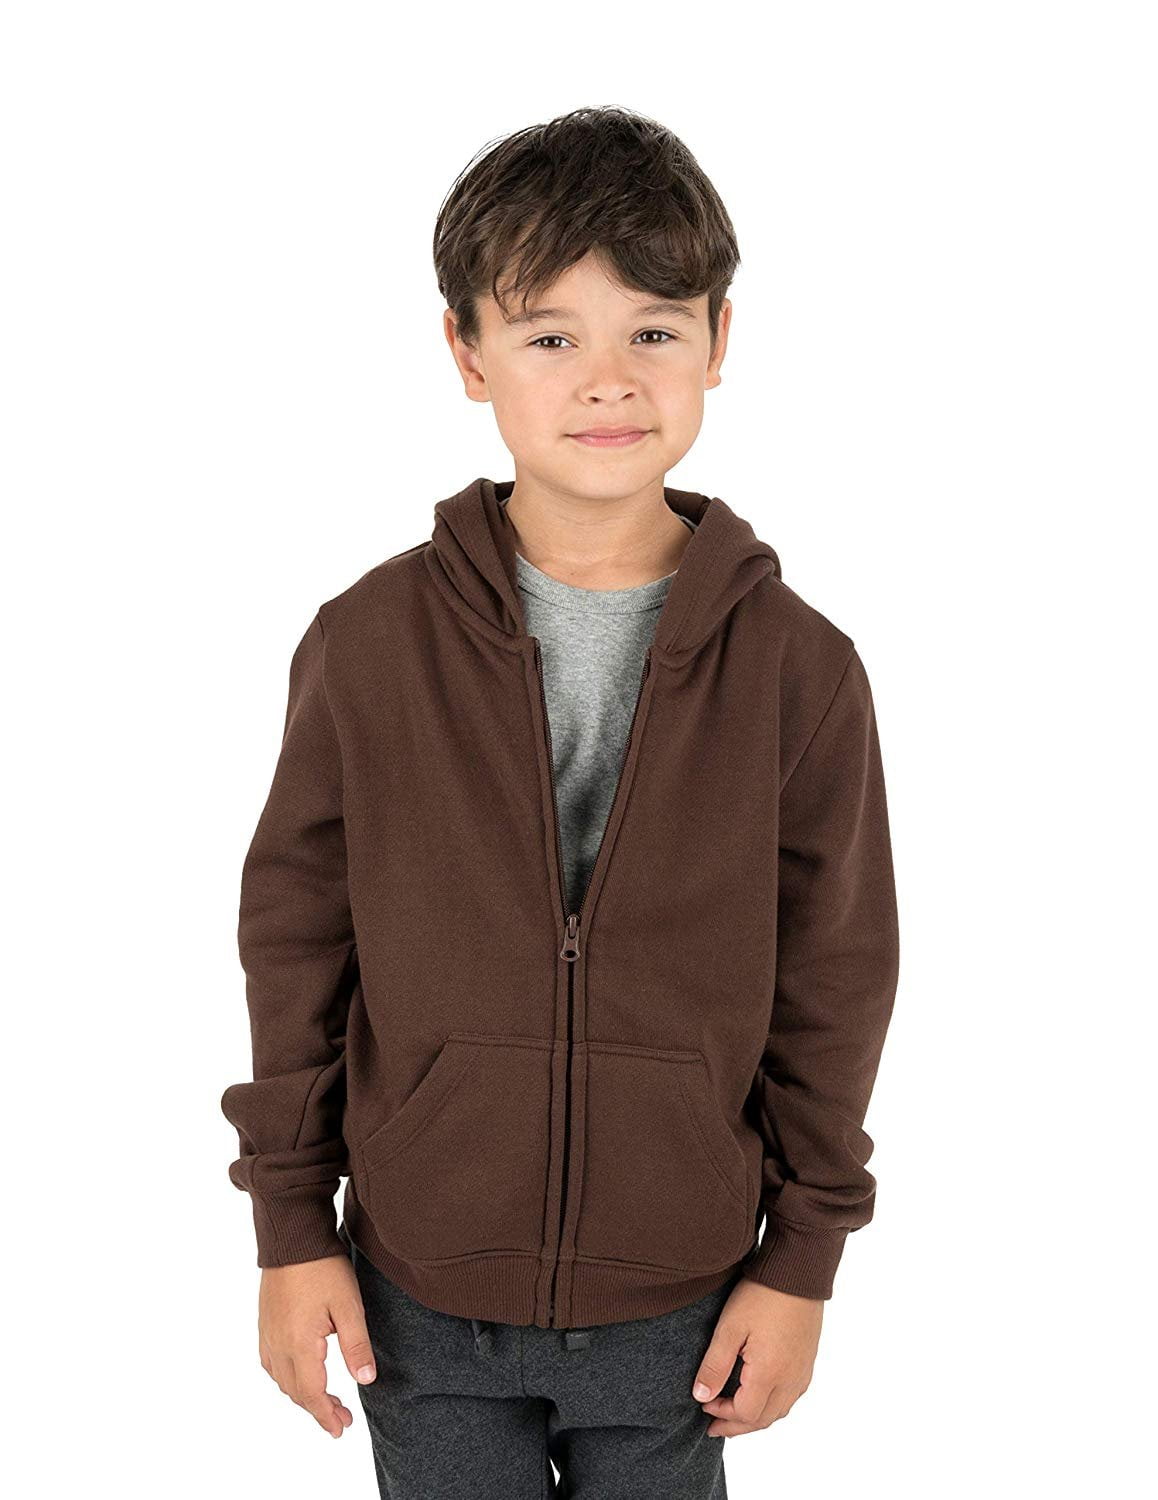 Size 2-14 Years Leveret Kids & Toddler Boys Girls Sweatshirt Hoodie Jacket Variety of Colors 